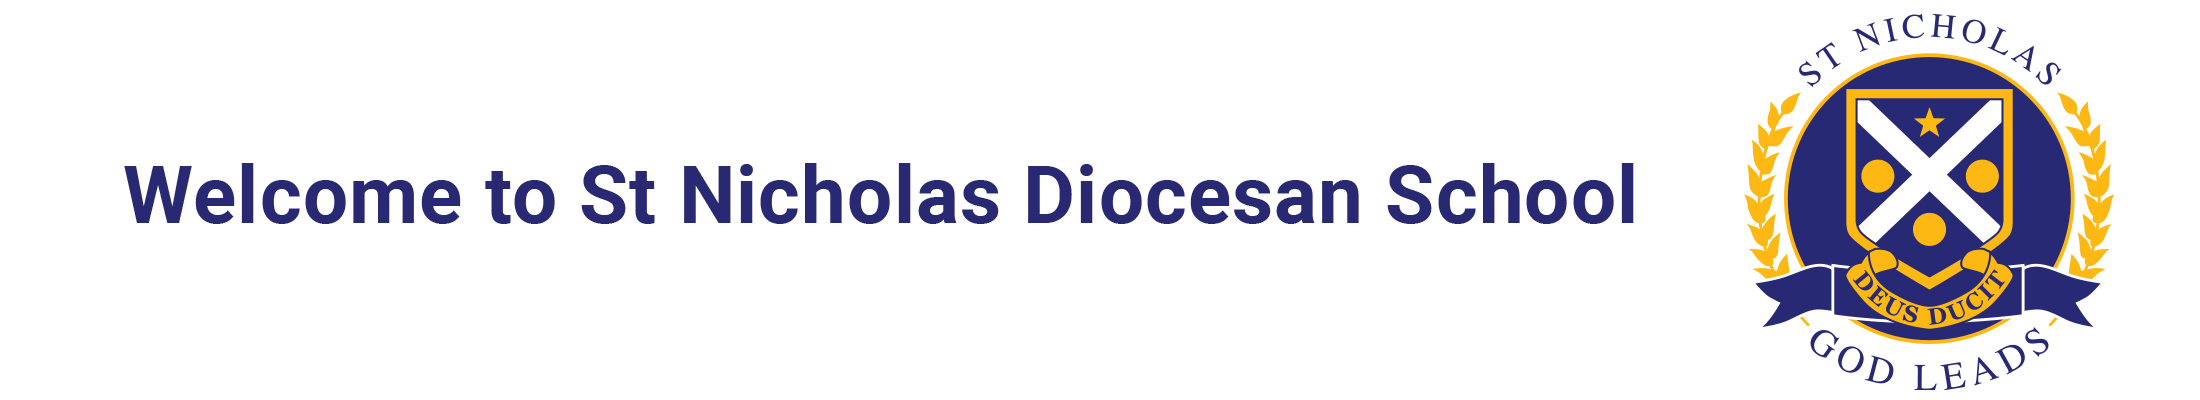 St Nicholas Diocesan